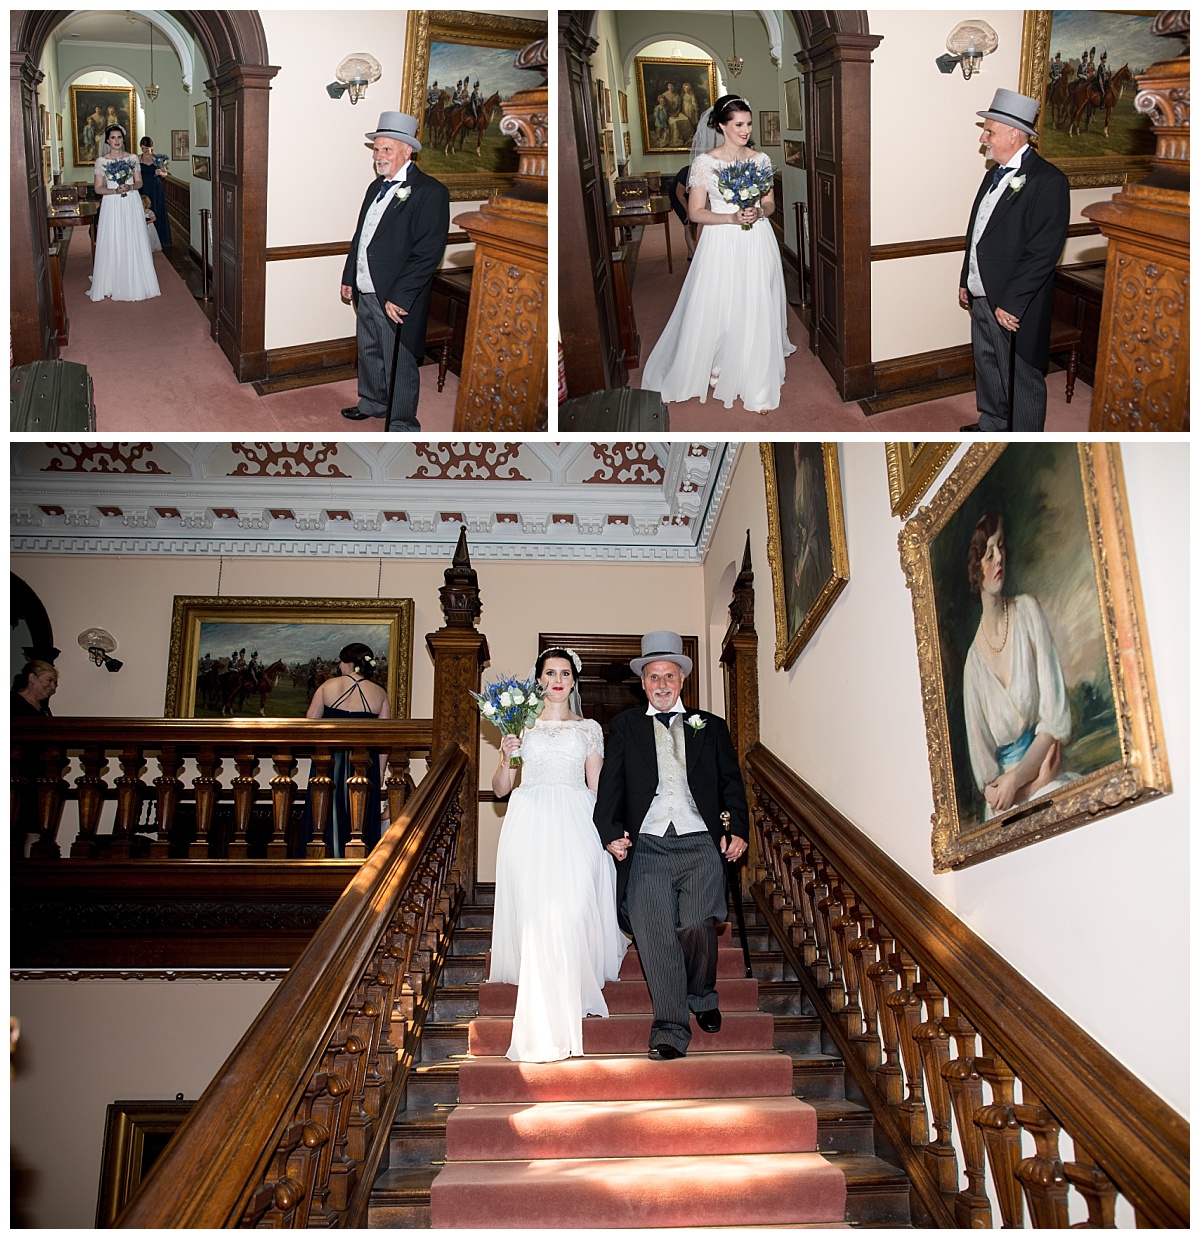 Wedding Photography Manchester - Sarah and Daves Arley Hall Wedding 23